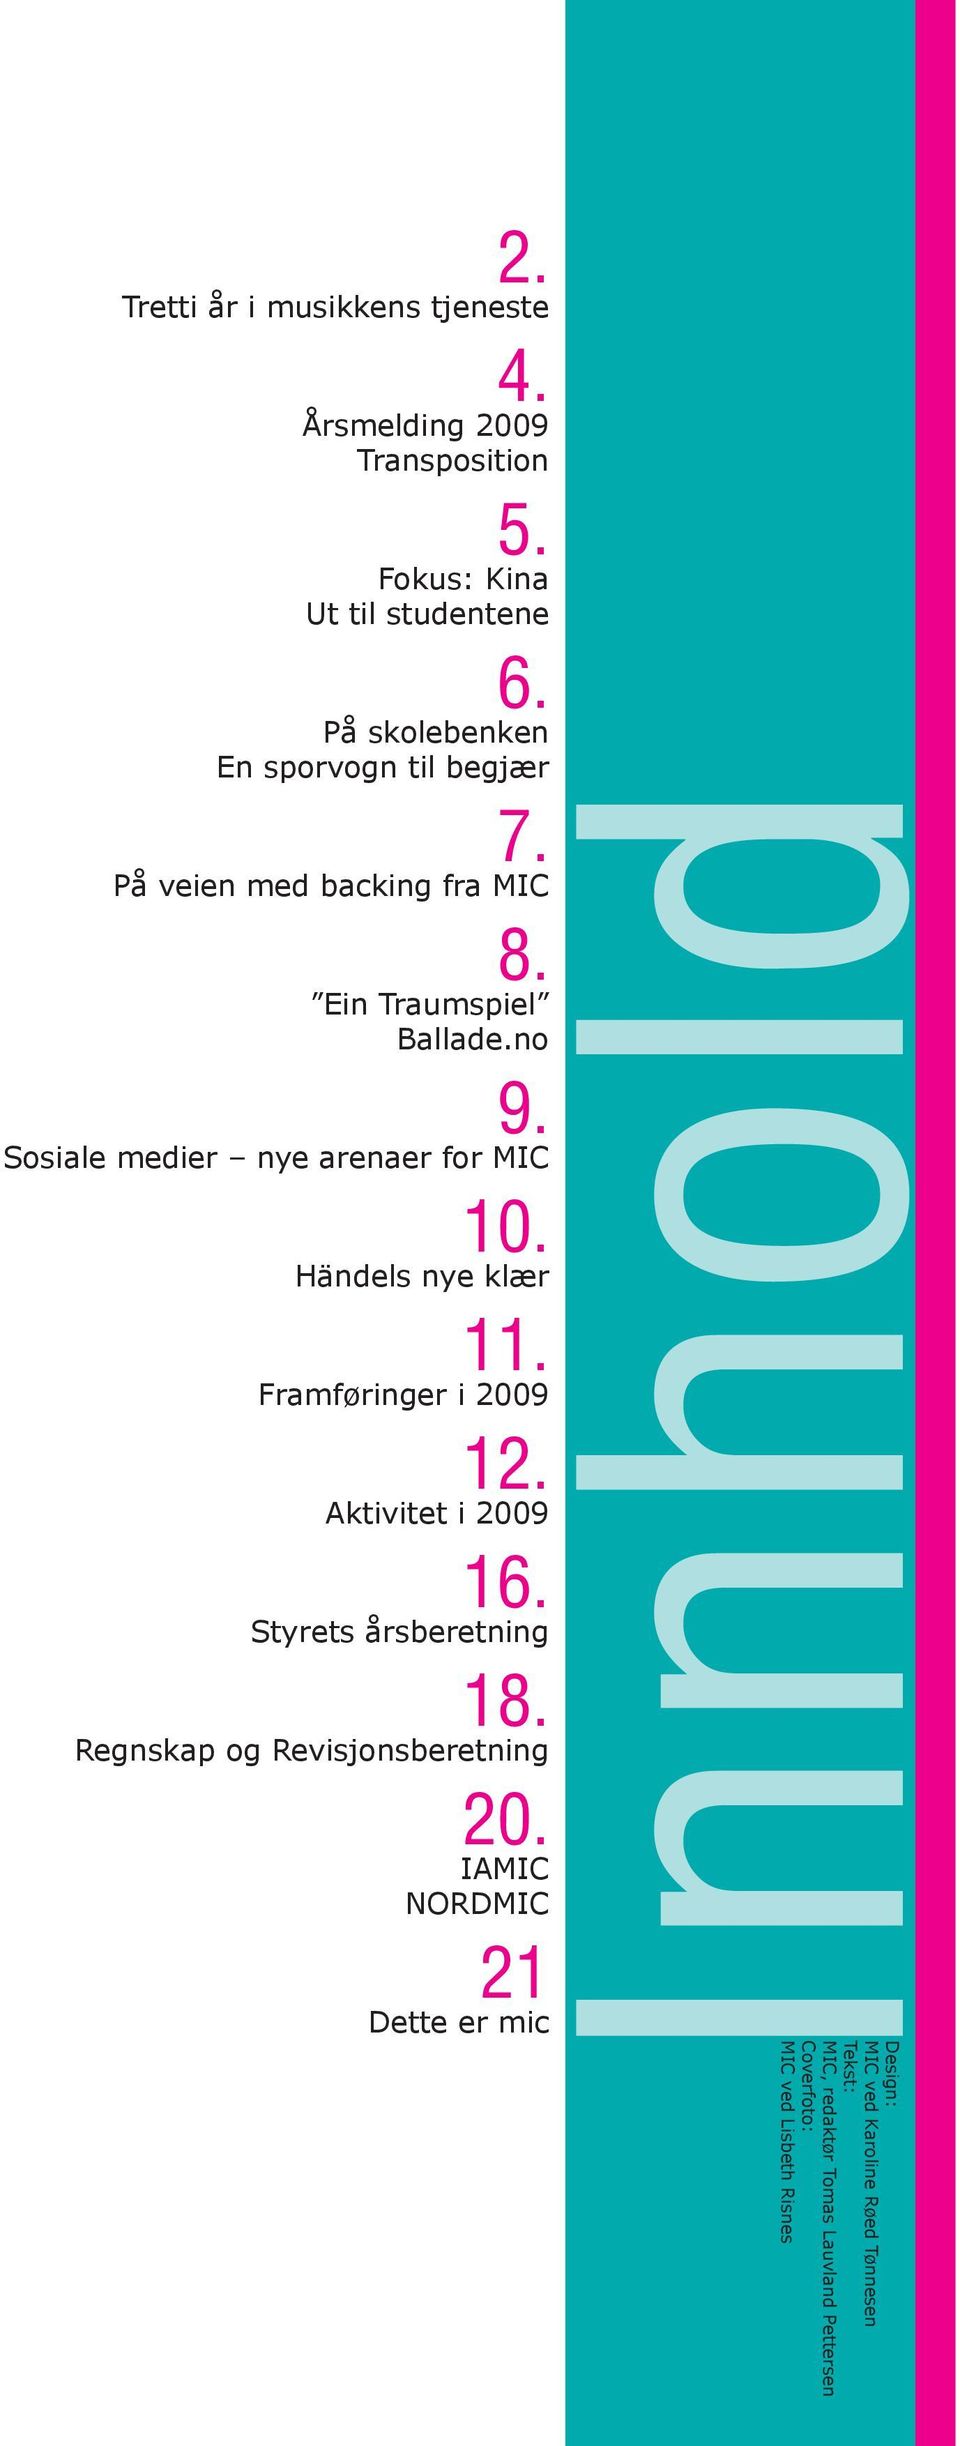 Sosiale medier nye arenaer for MIC 10. Händels nye klær 11. Framføringer i 2009 12. Aktivitet i 2009 16. Styrets årsberetning 18.